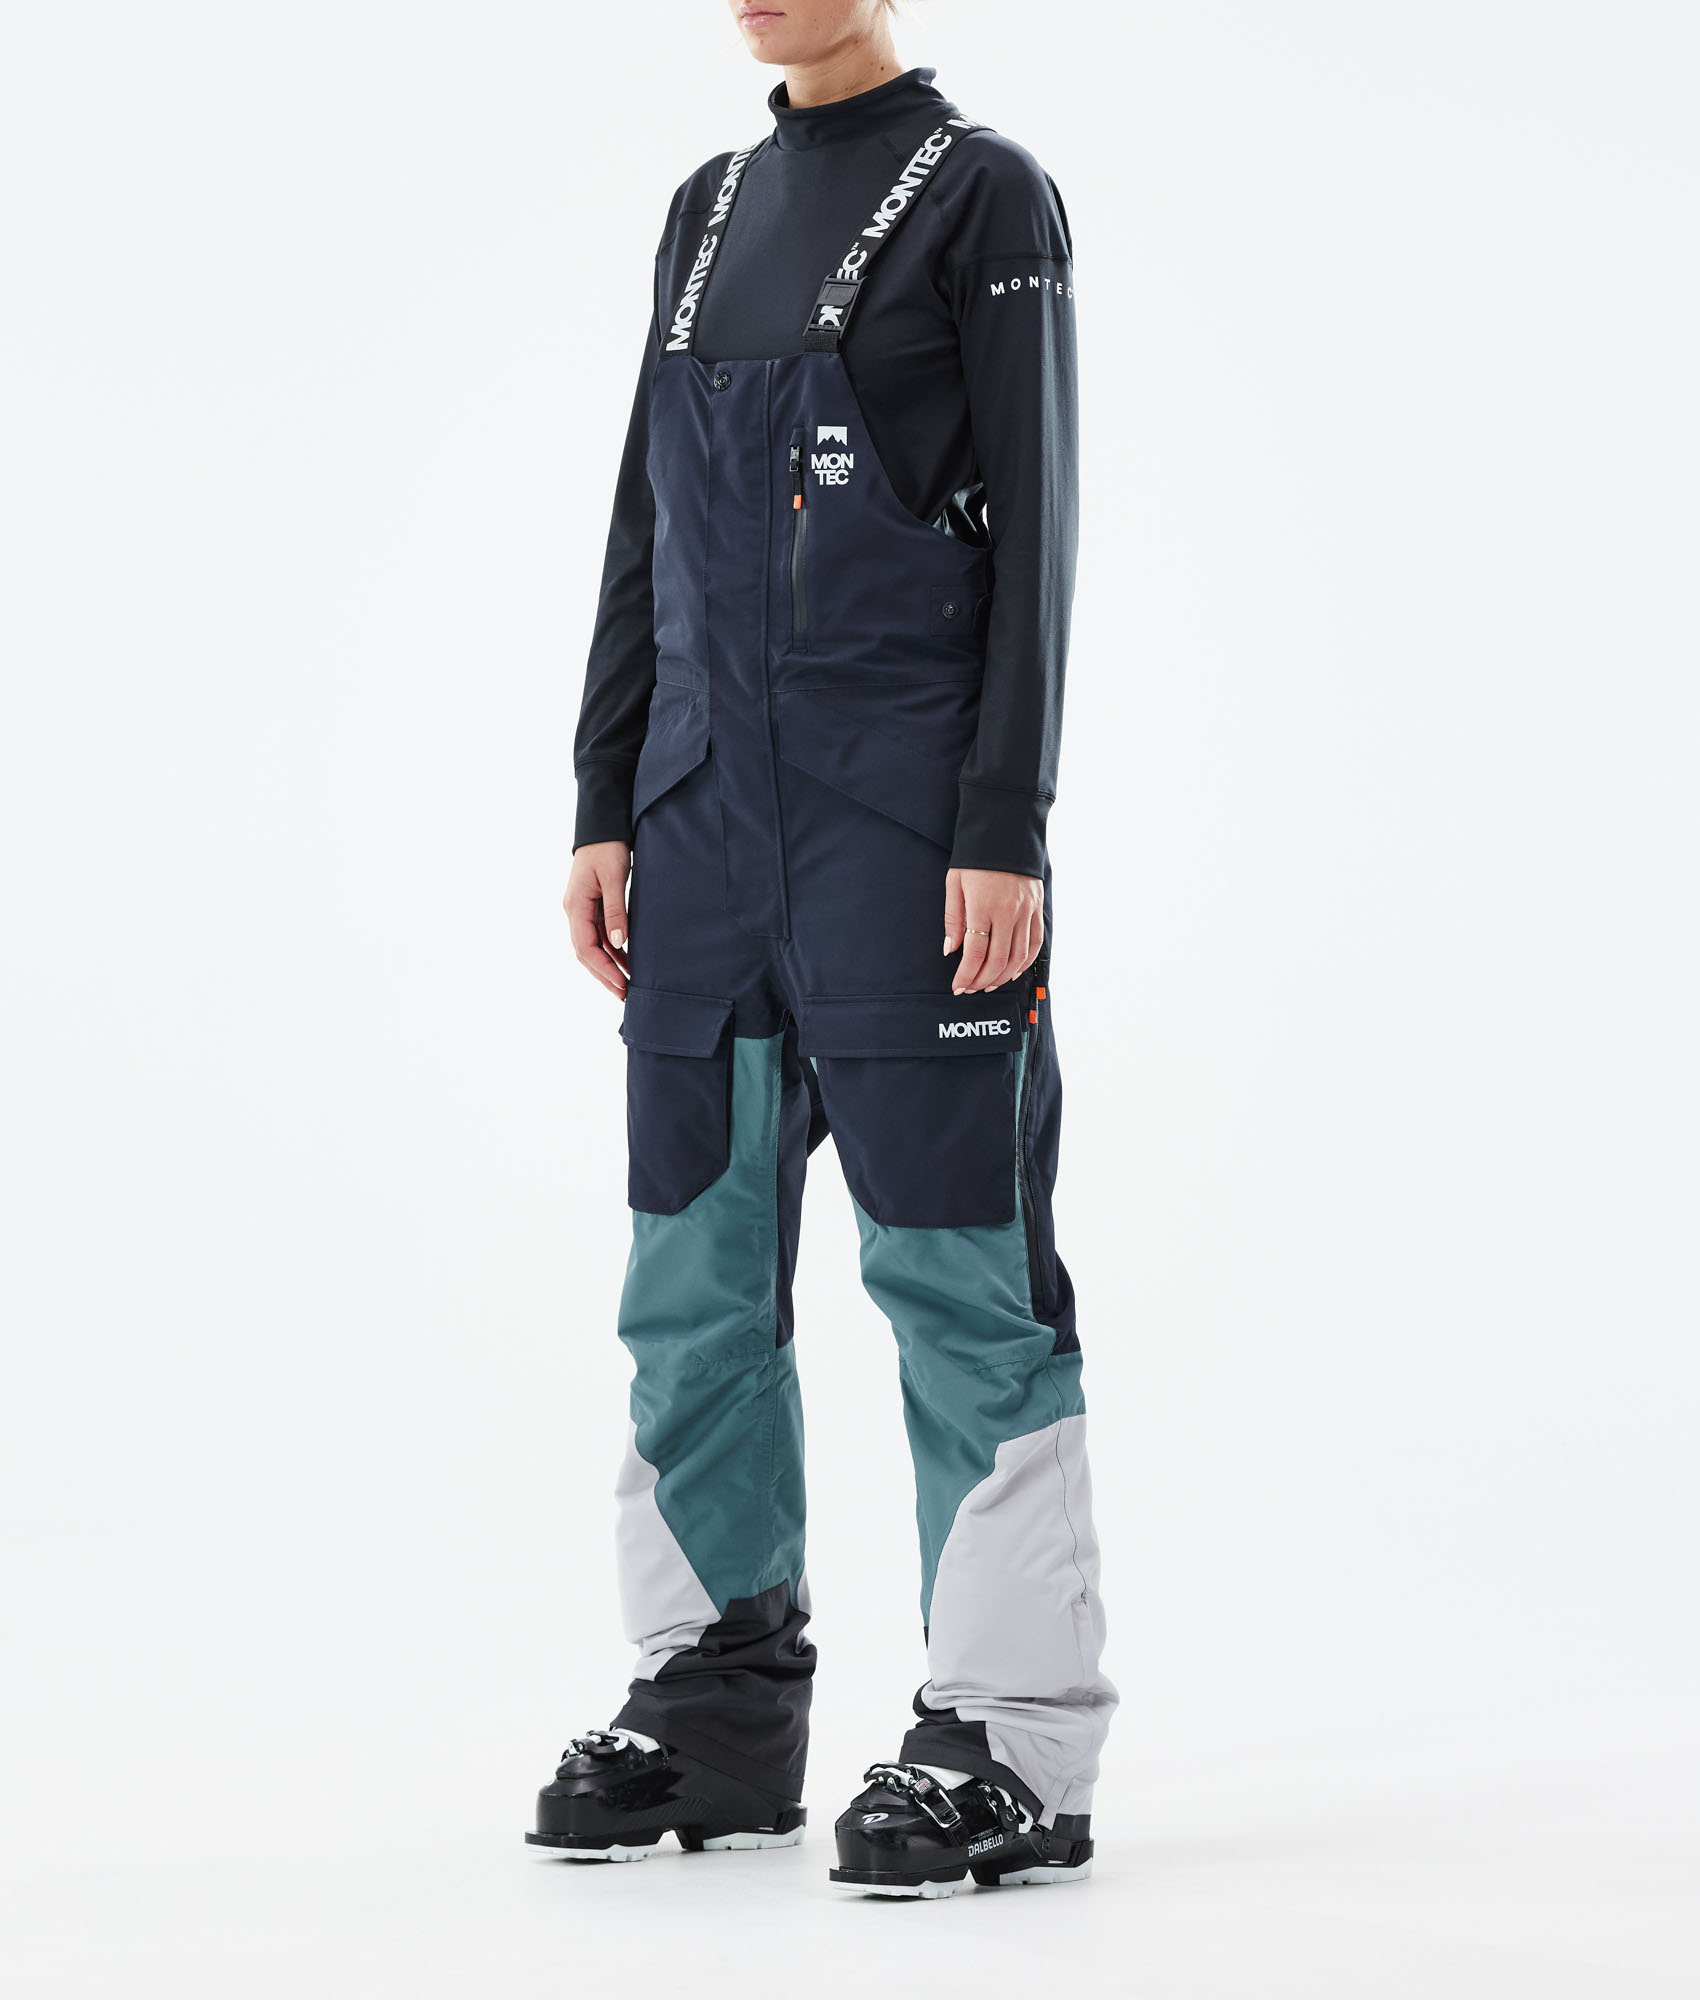 NWT Montec Fawk Ski Pants Medium